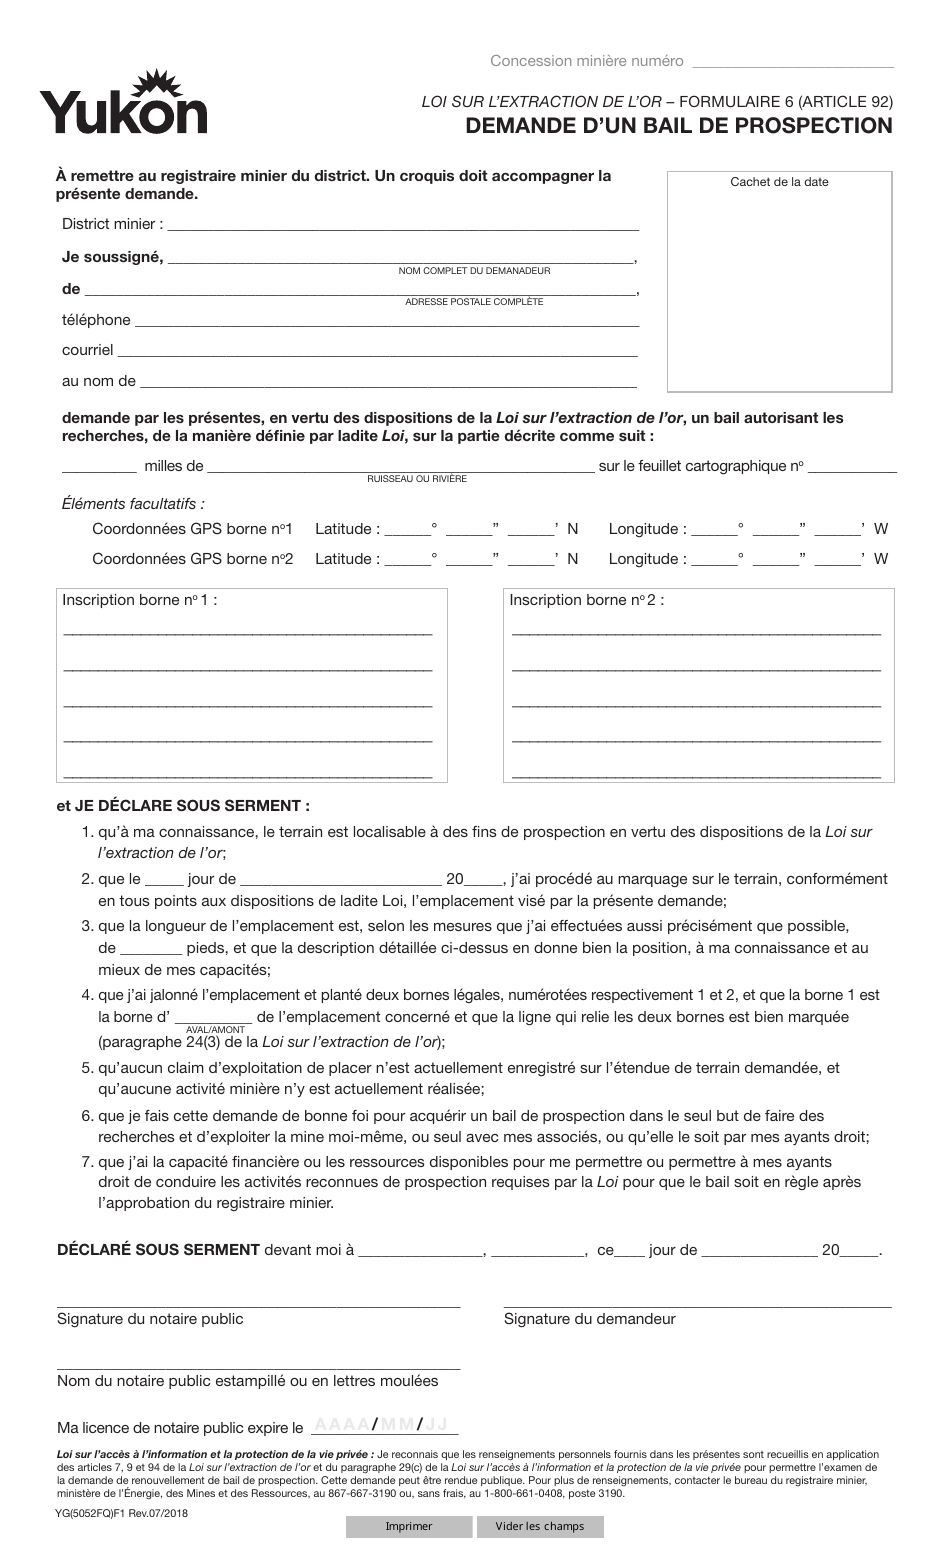 Forme YG5052 (6) Demande Dun Bail De Prospection - Yukon, Canada (French), Page 1